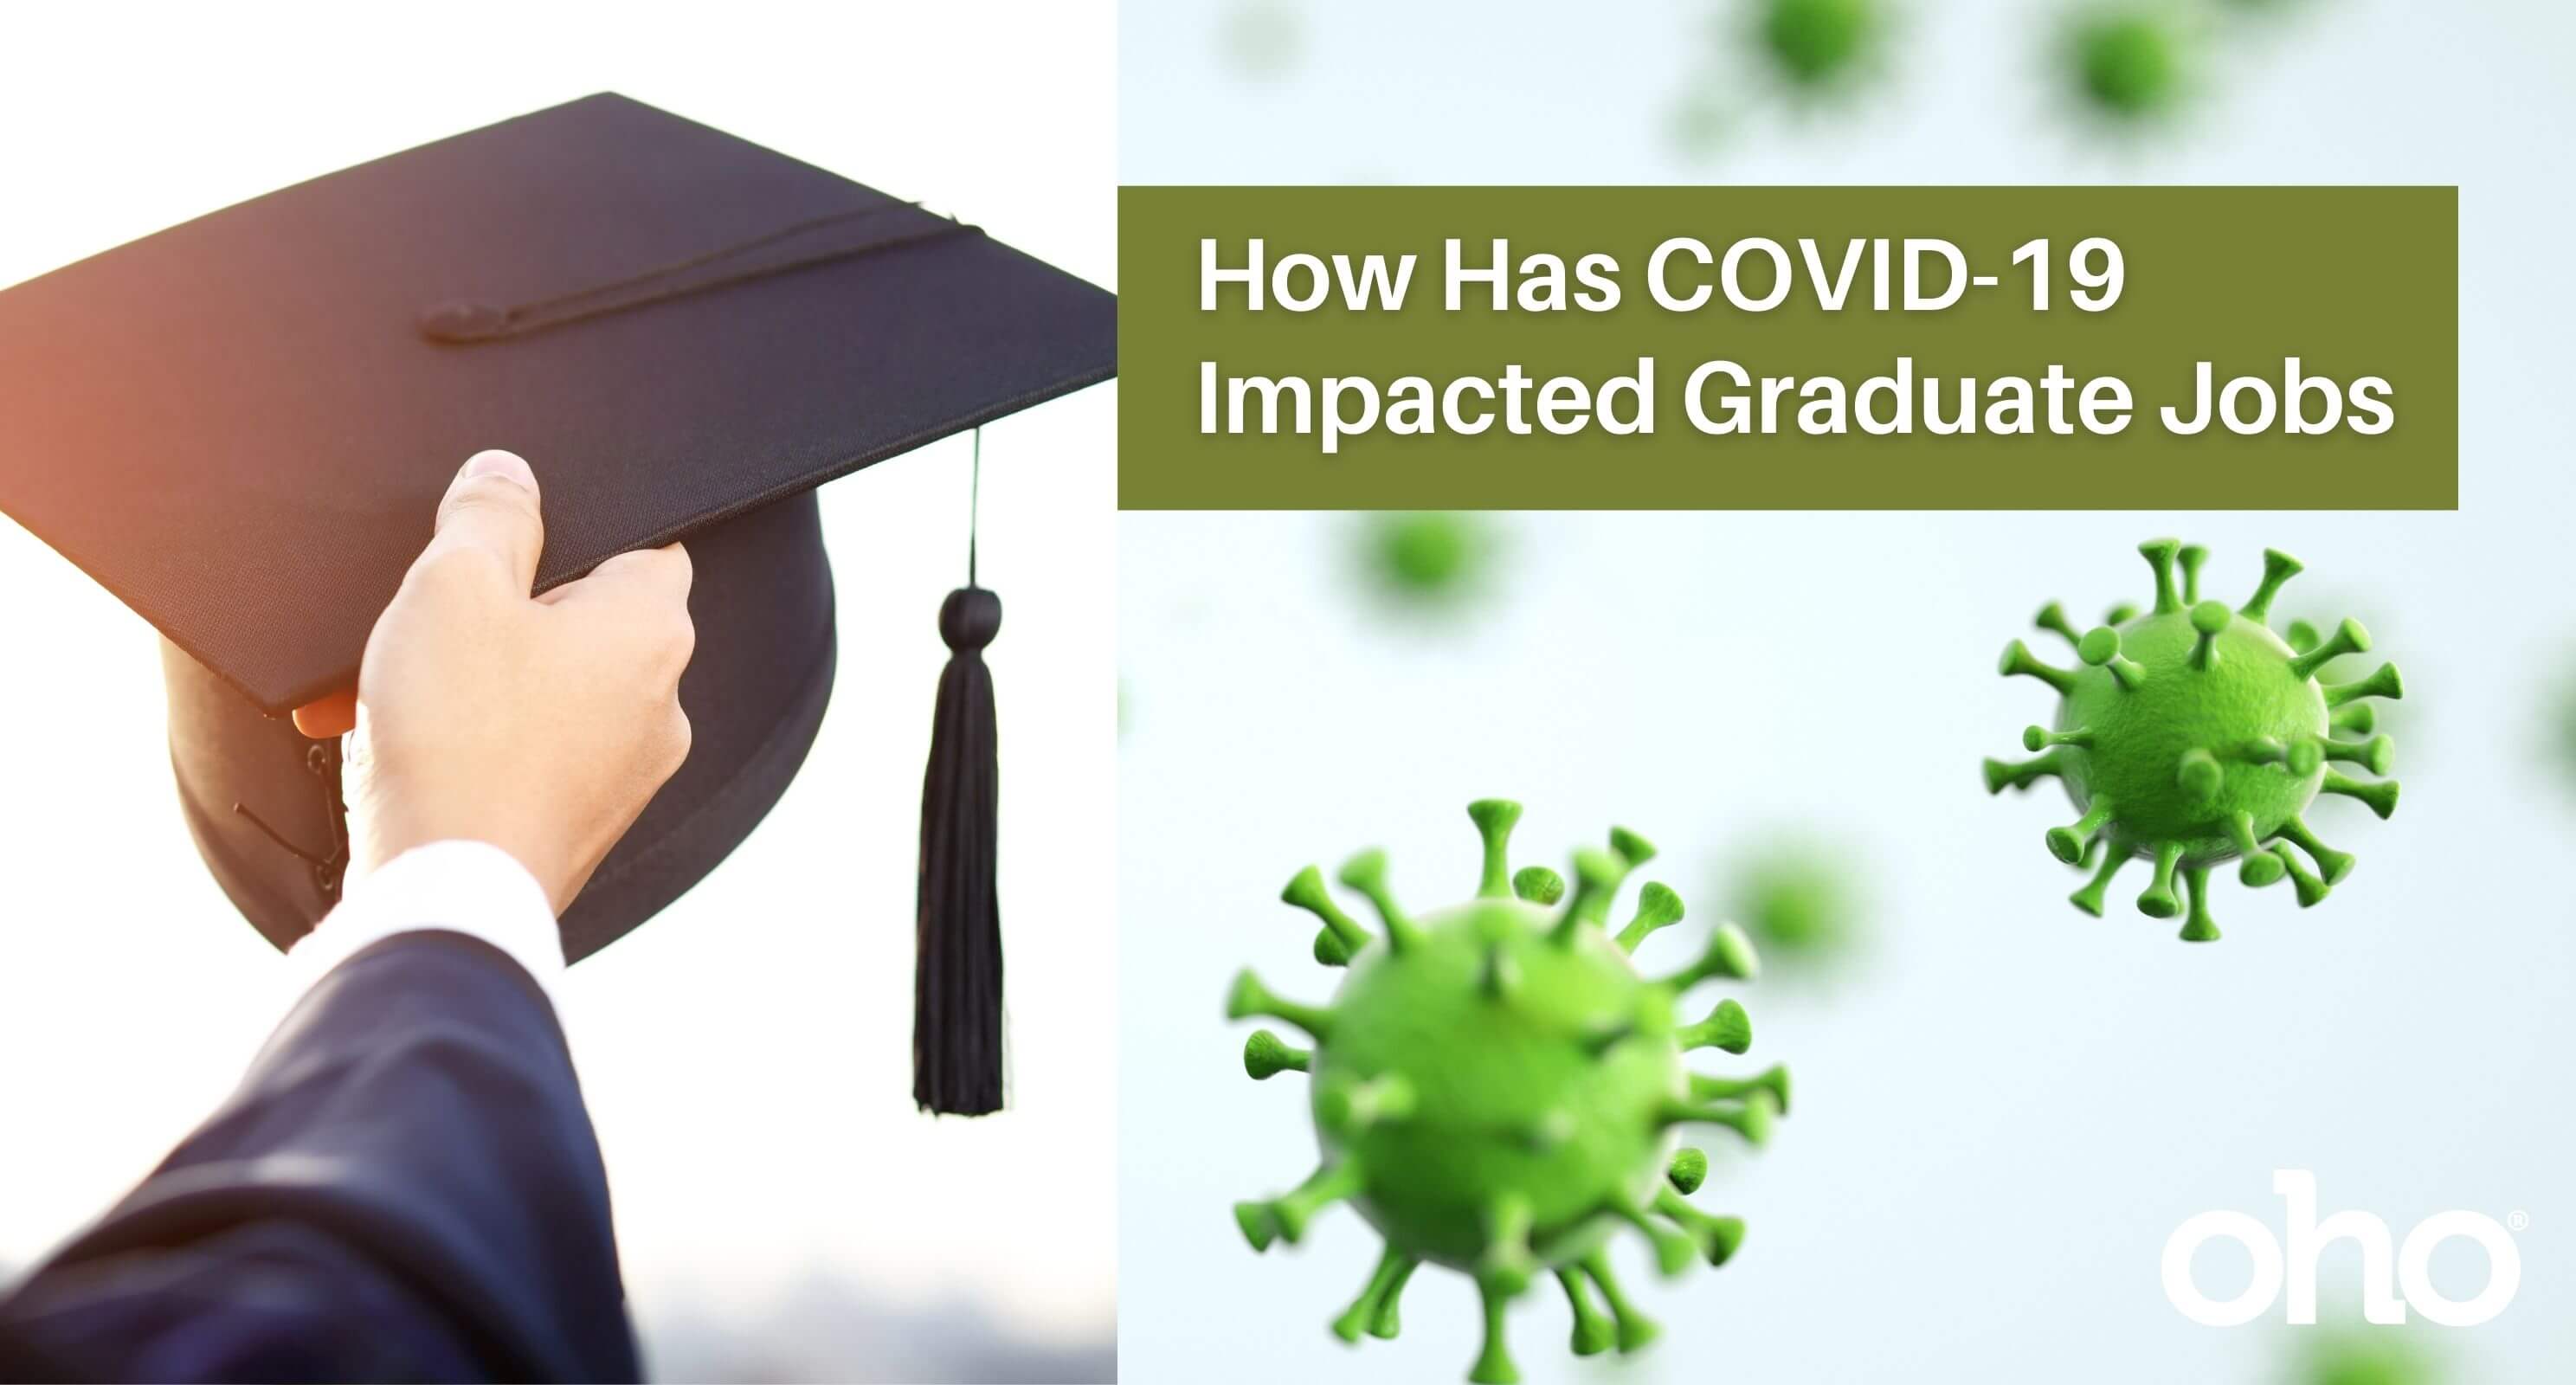 How has COVID-19 impacted graduate jobs?